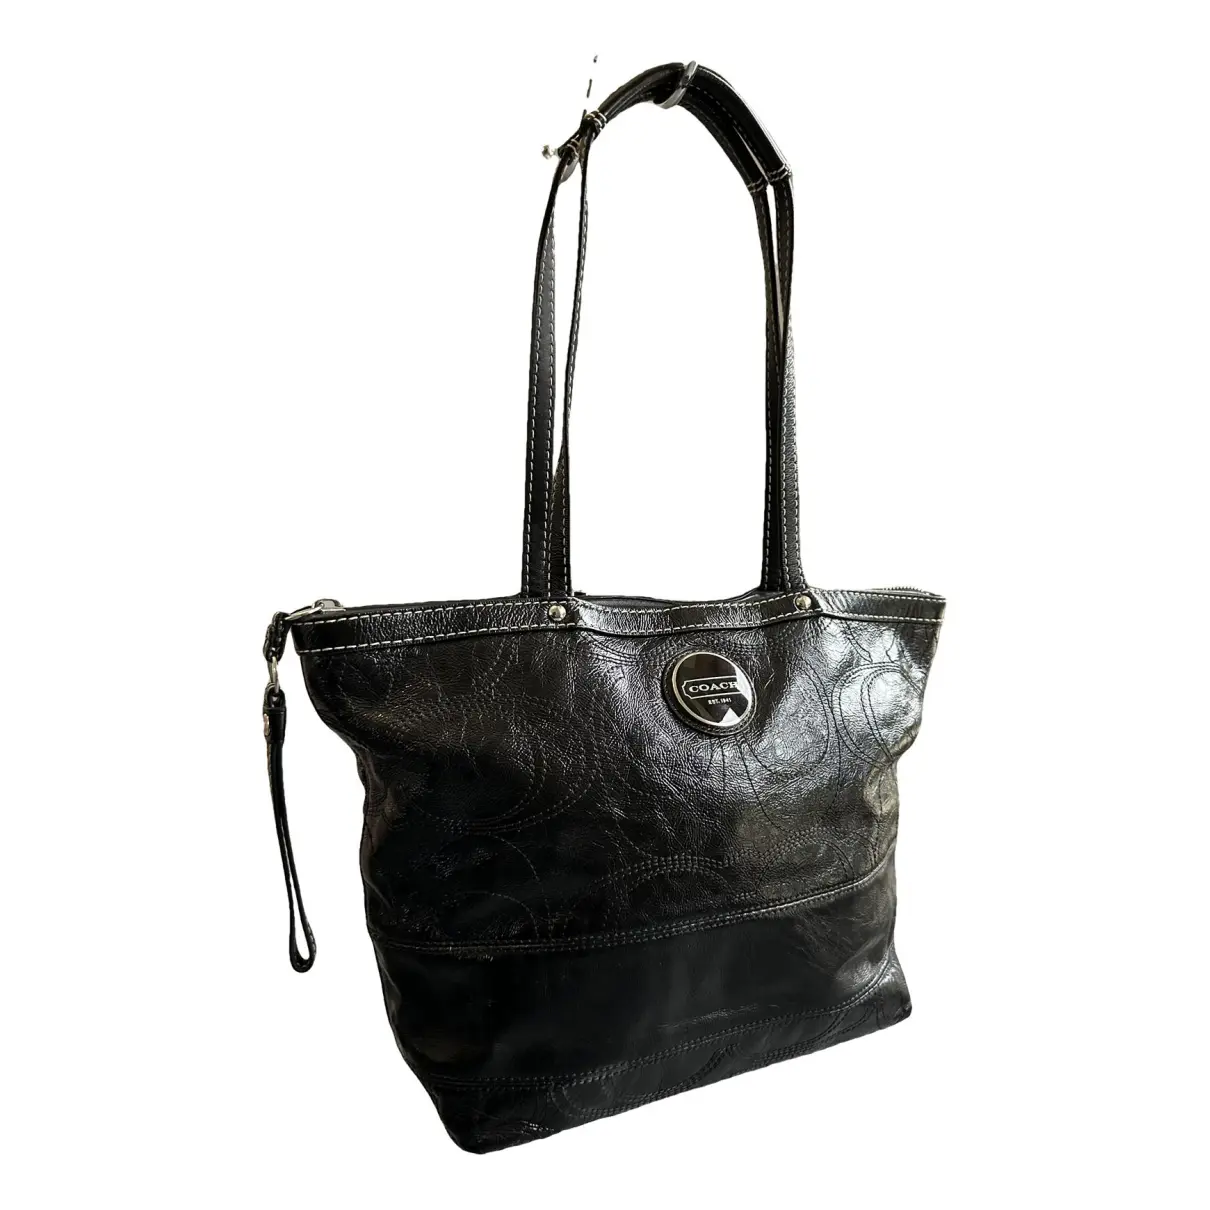 Prairie Satchel patent leather handbag Coach